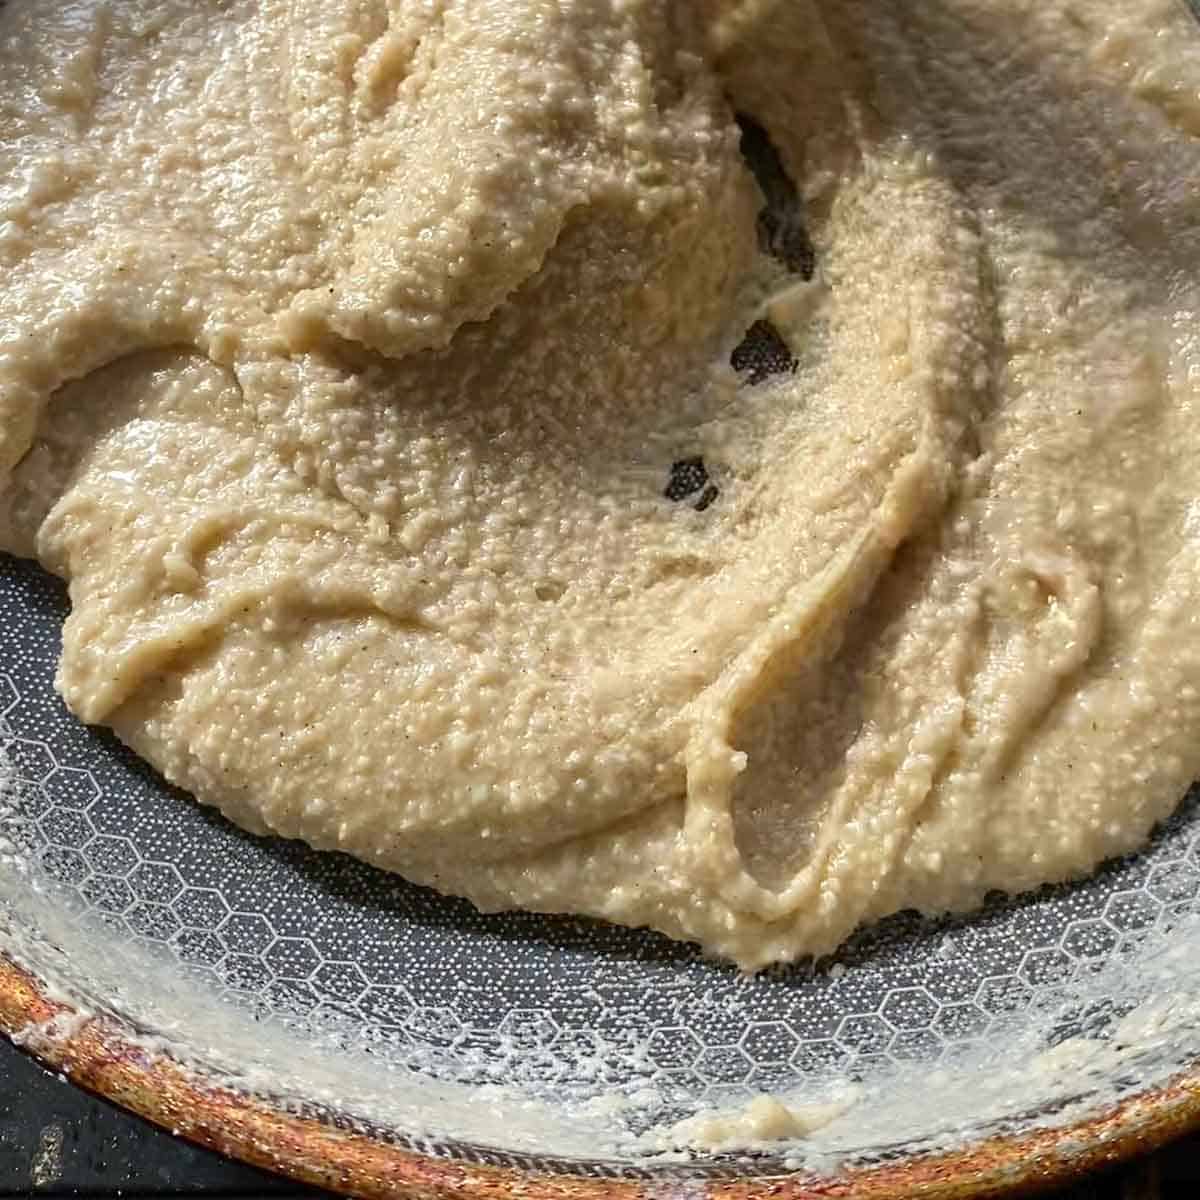 Thick kaju katli dough when finished cooking in a pan